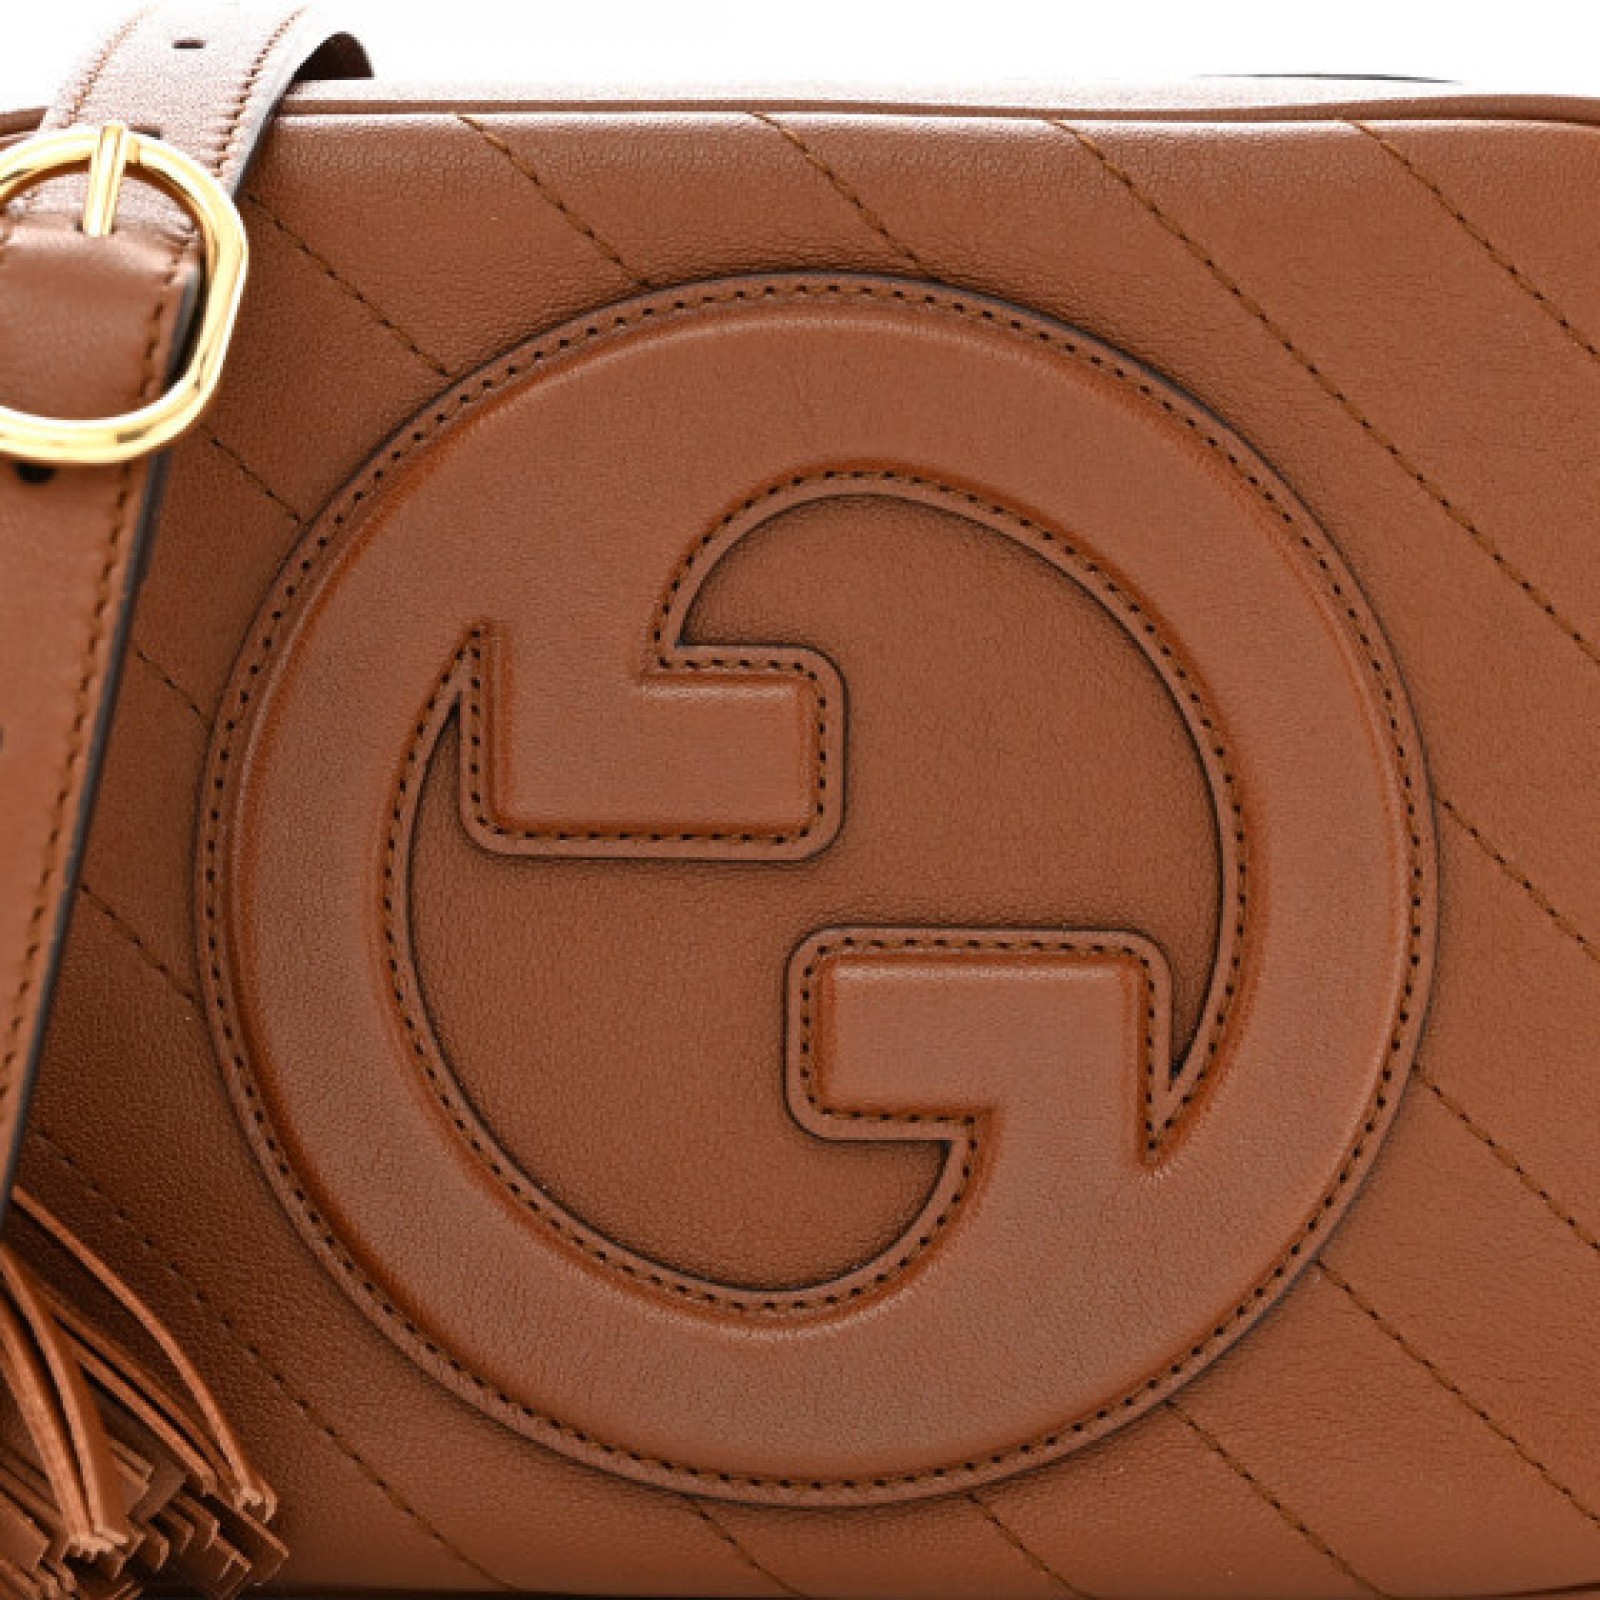 Gucci Blondie Small Shoulder Bag